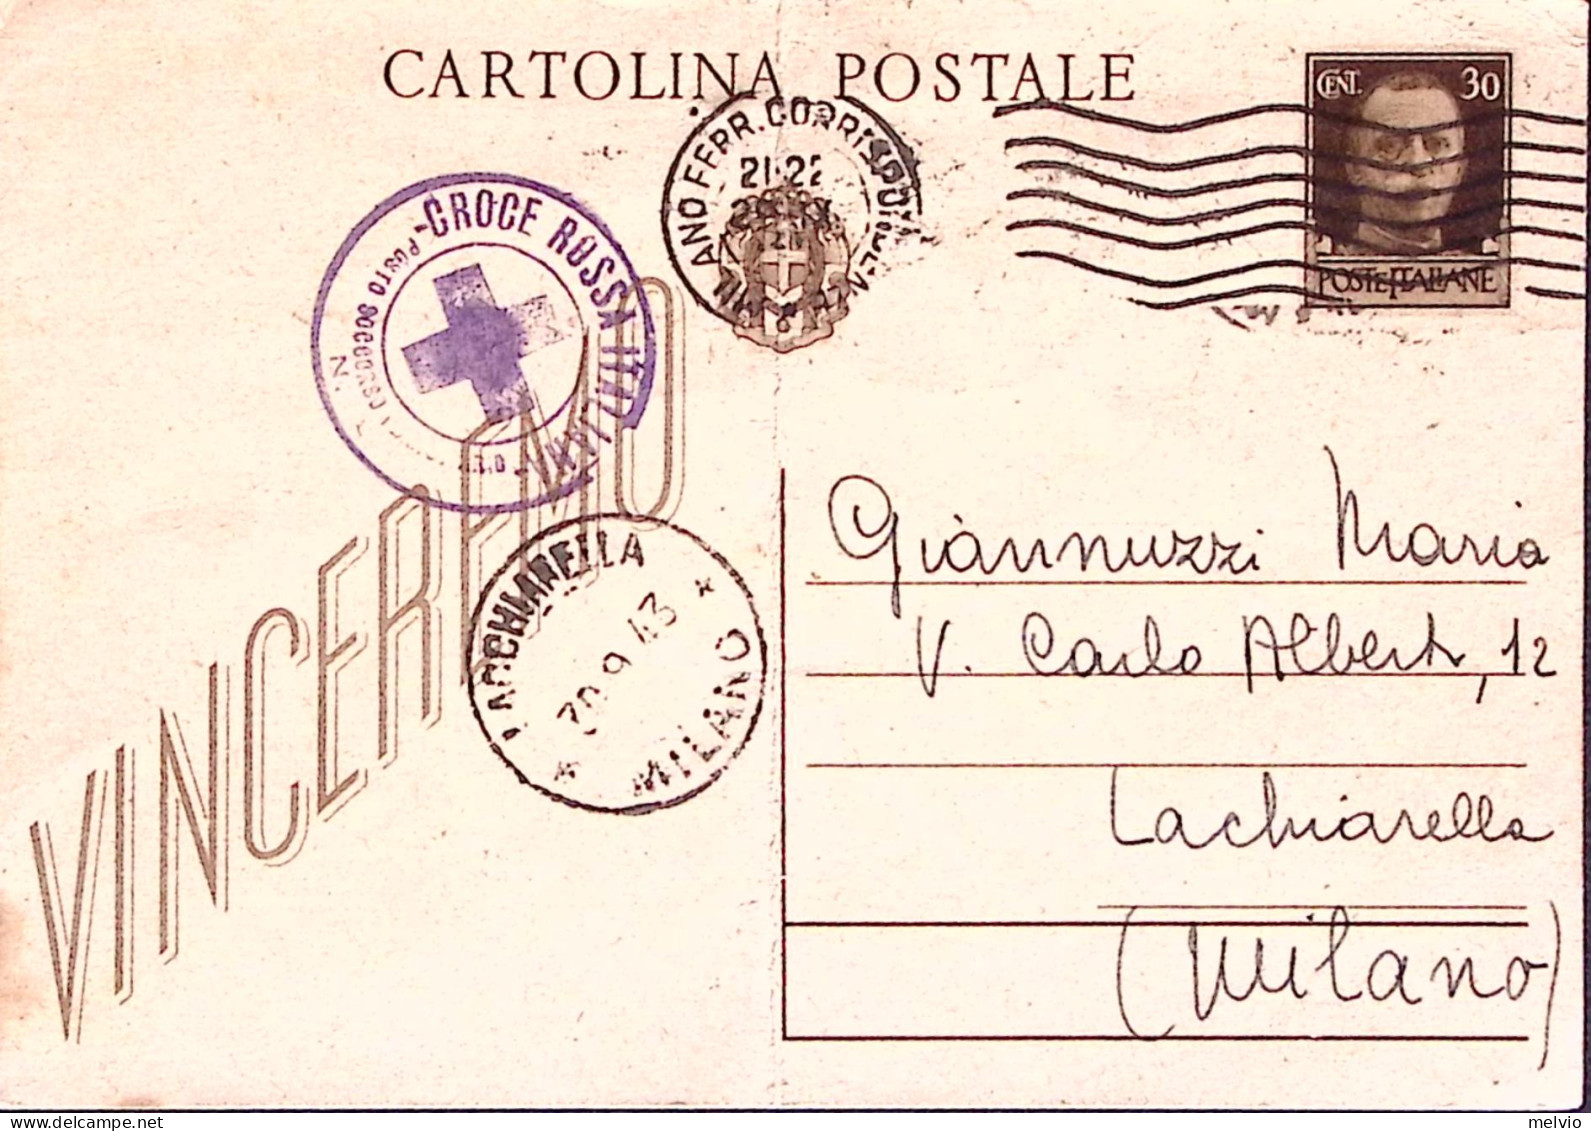 1943-CROCE ROSSA CREMONA tondo su cartolina postale Vinceremo c.30 Cremona (21.9